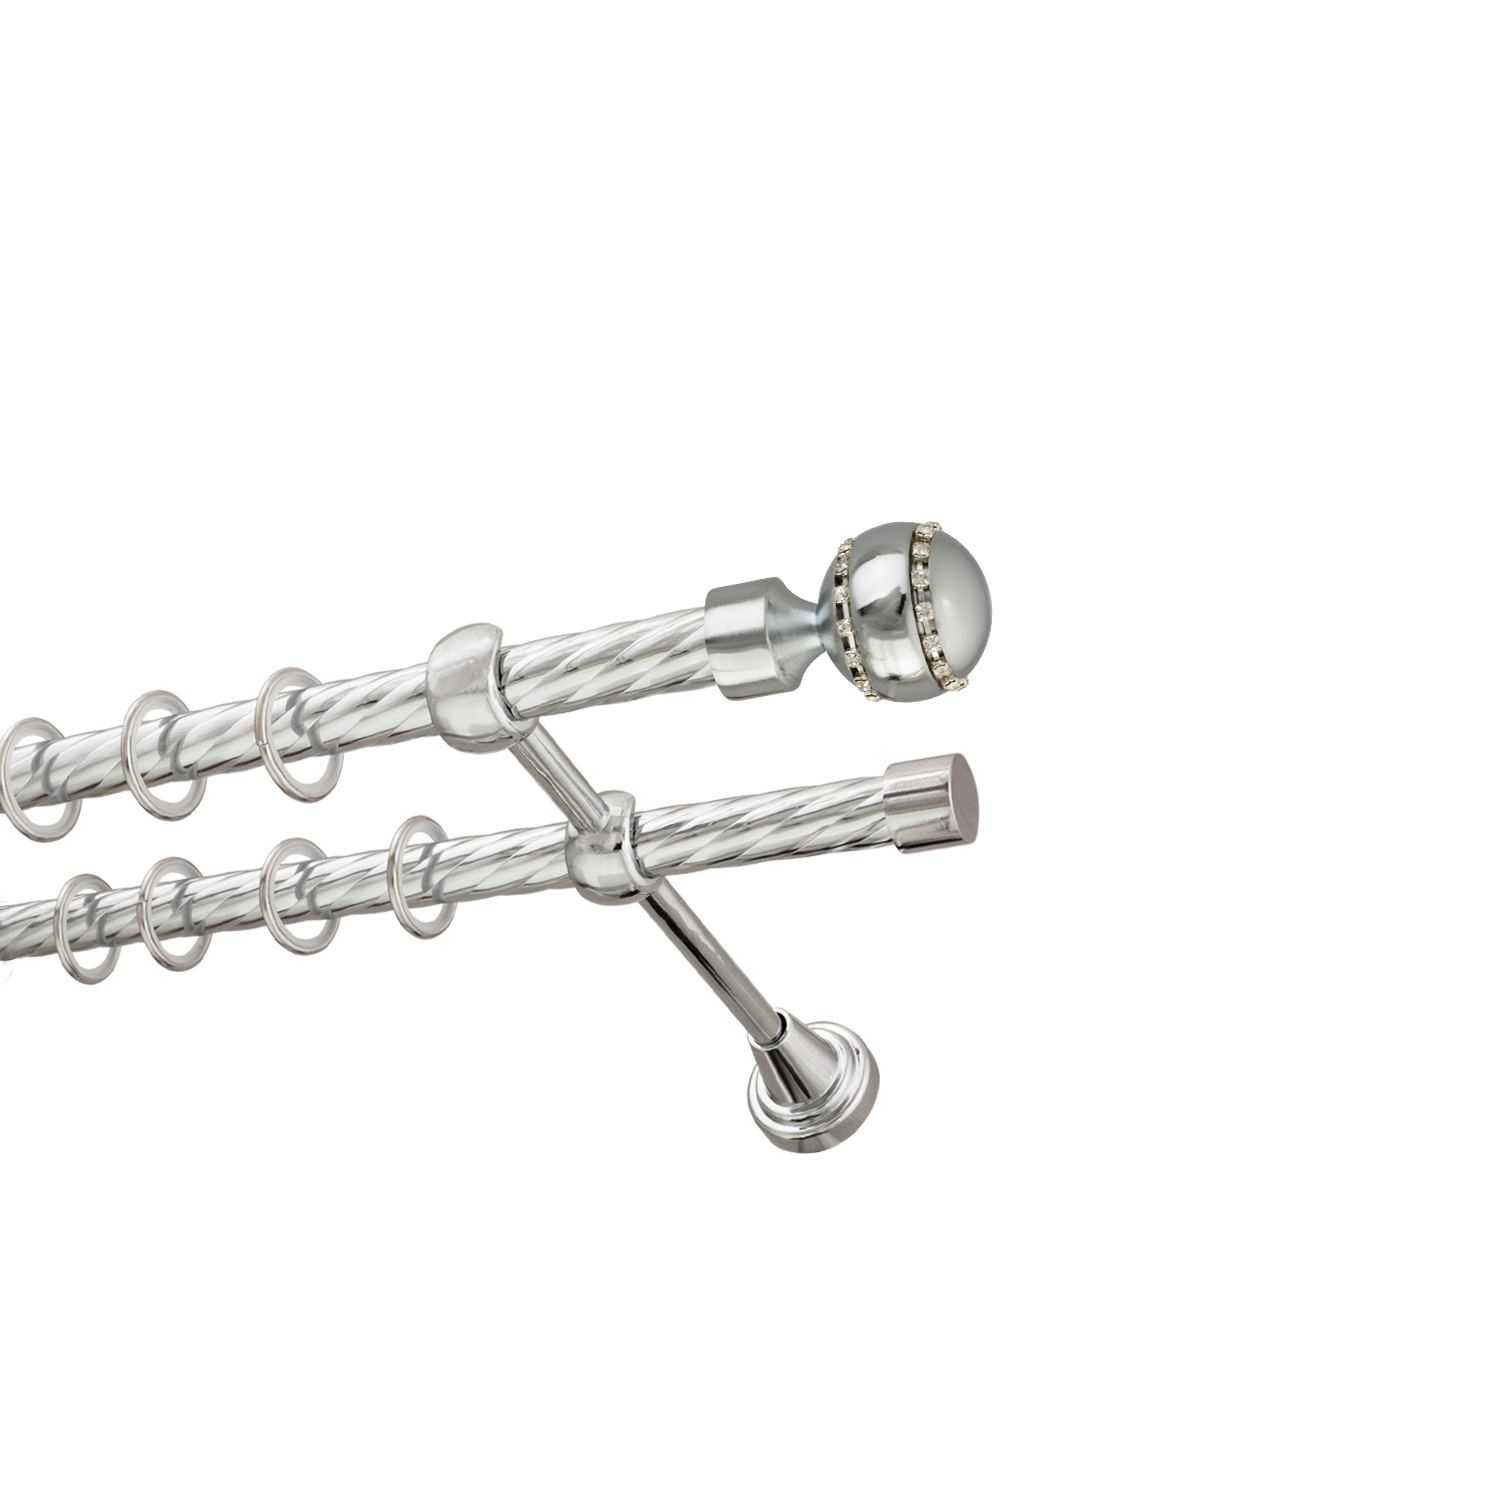 Металлический карниз для штор Модерн, двухрядный 16/16 мм, серебро, витая штанга, длина 160 см - фото Wikidecor.ru